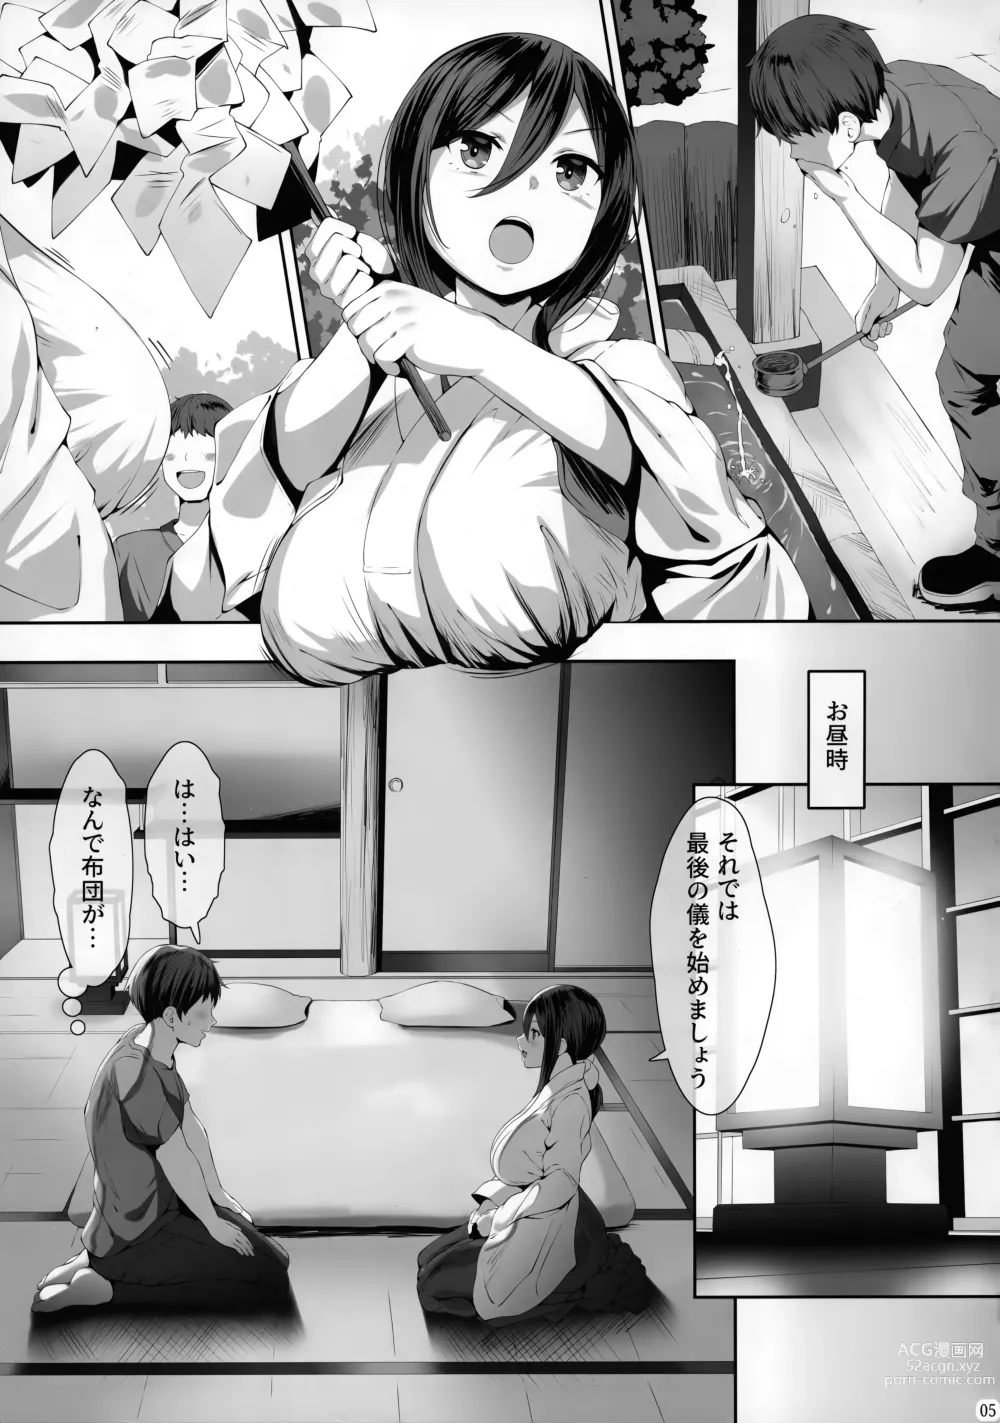 Page 5 of doujinshi Chichi Ari Tani Ari